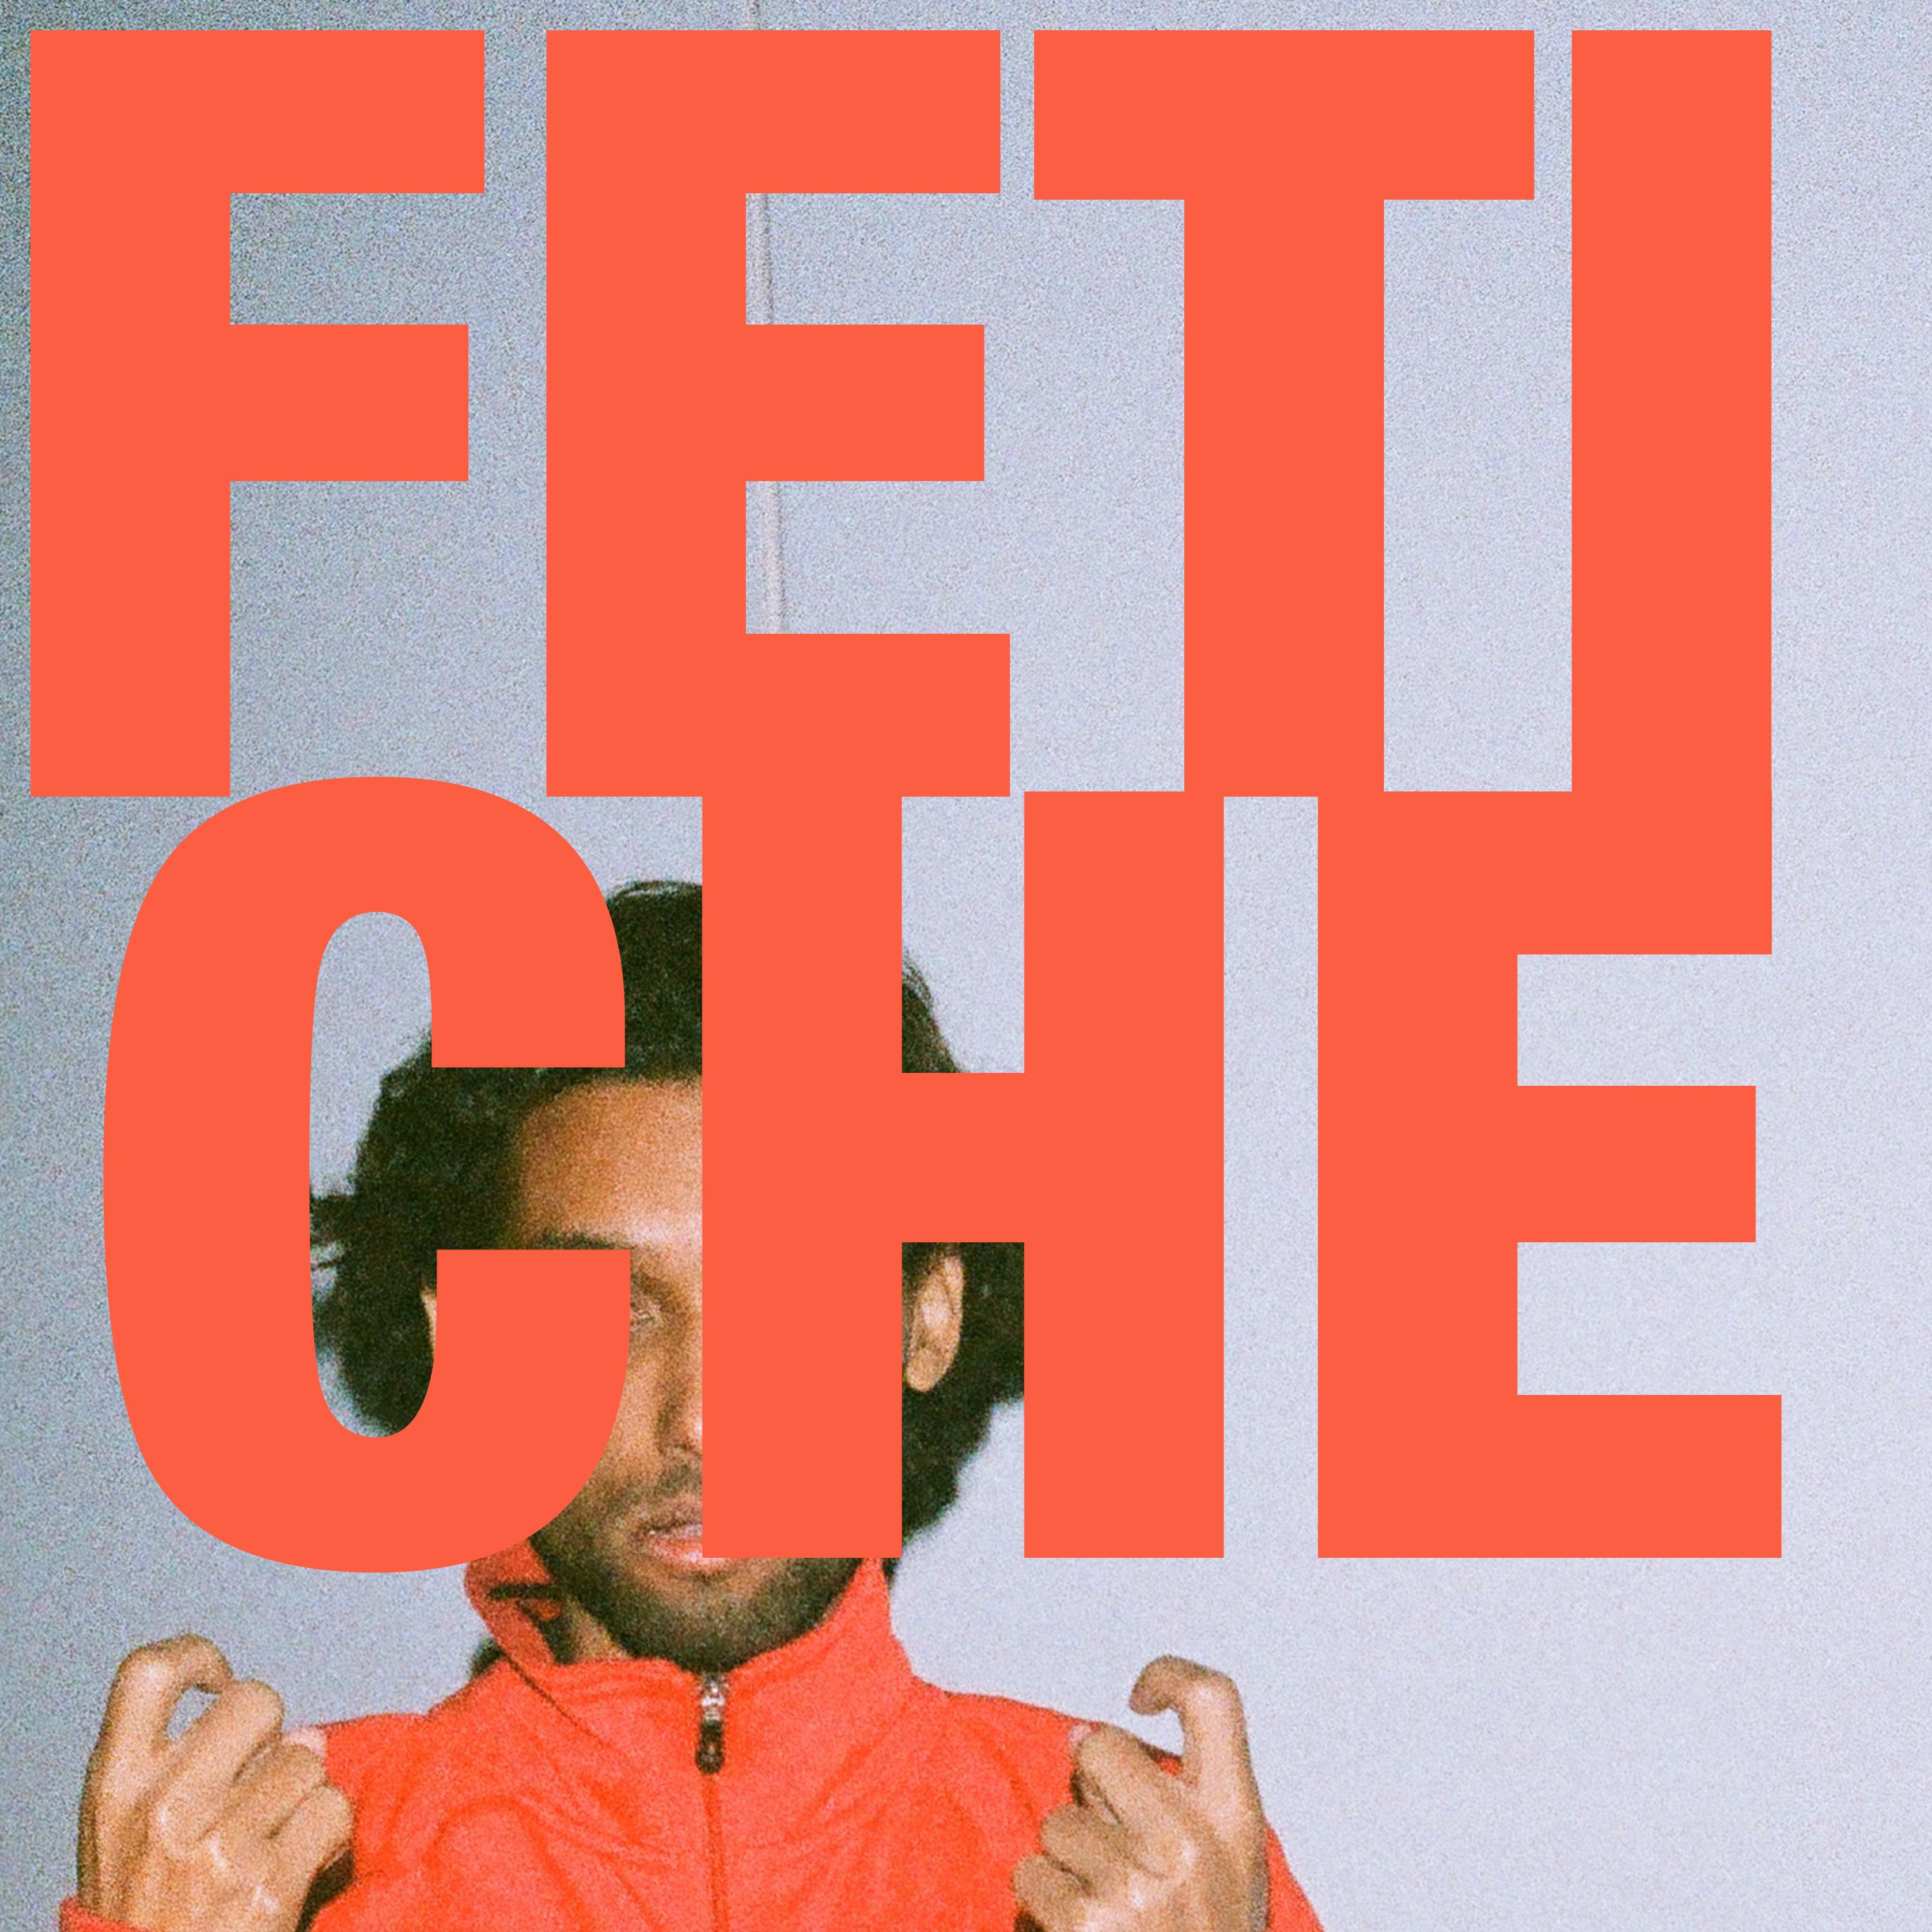 Постер альбома Fetiche